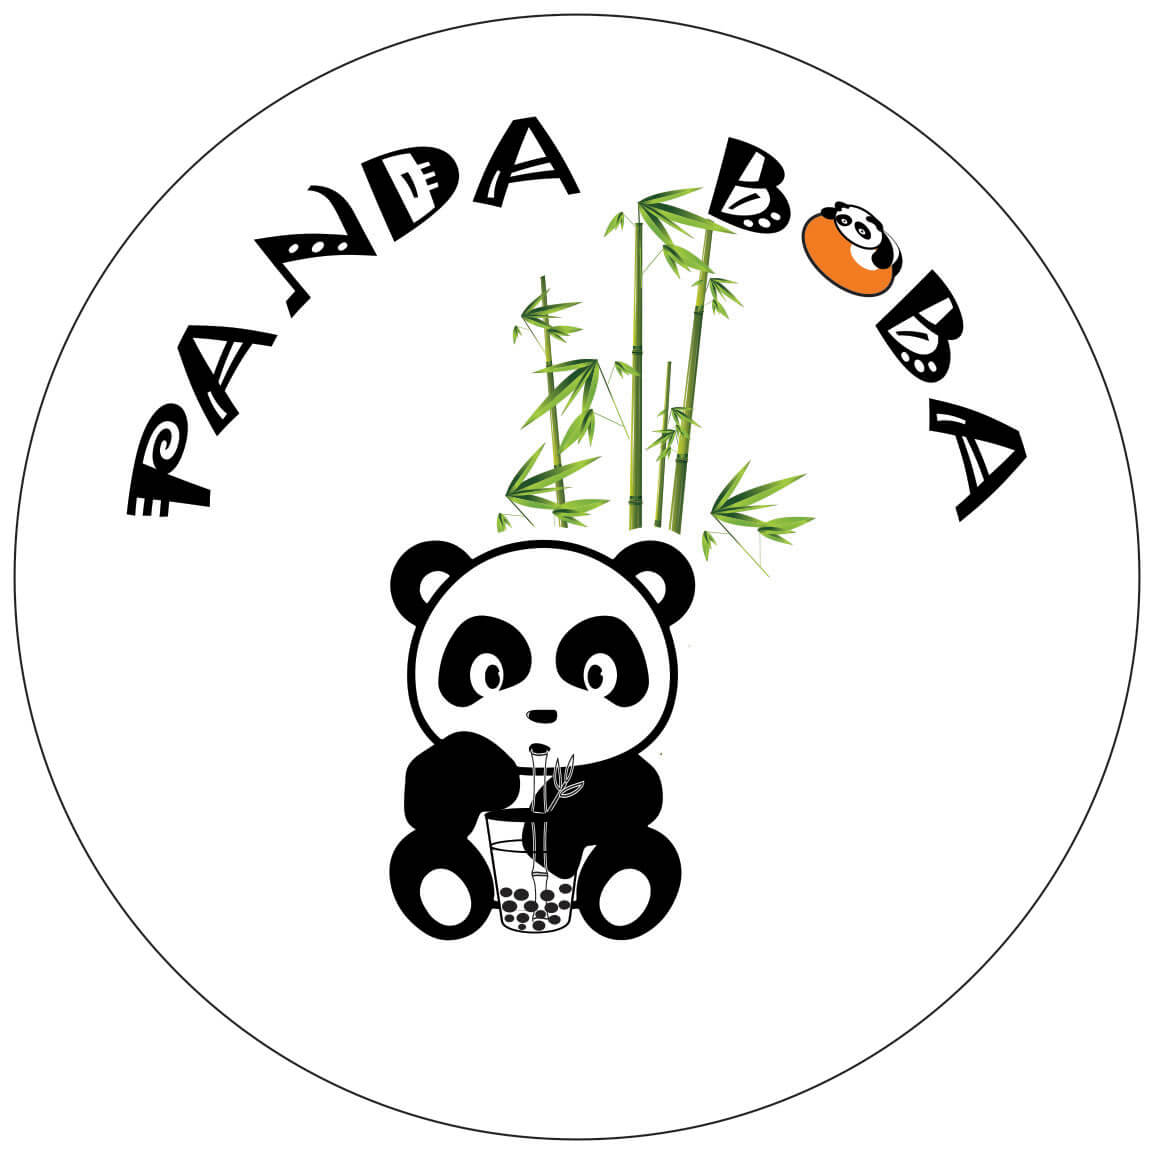 Panda Boba